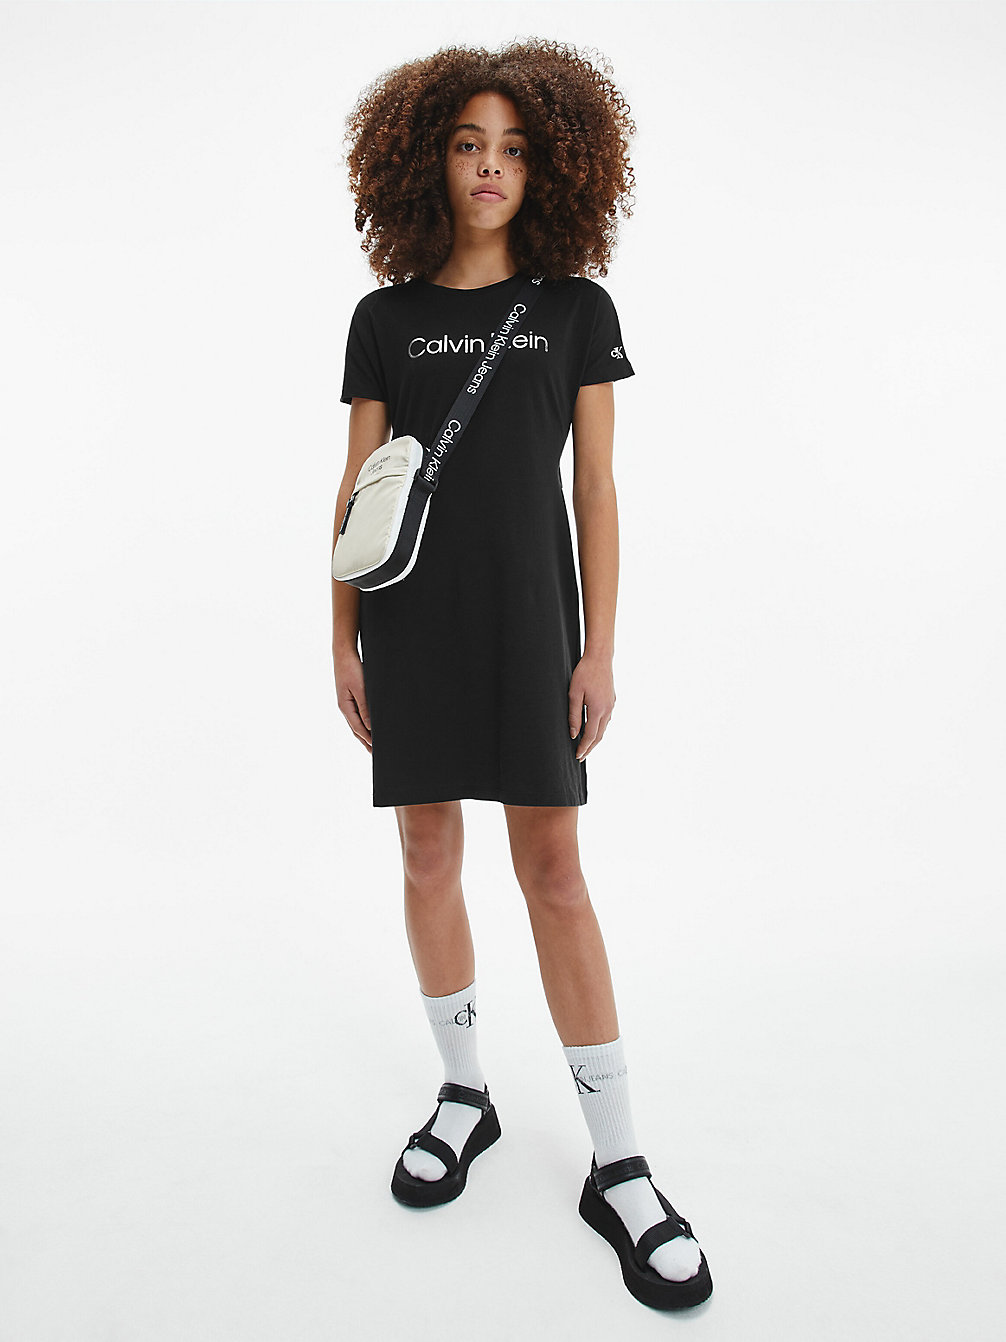 CK BLACK Metallic Logo T-Shirt Dress undefined girls Calvin Klein